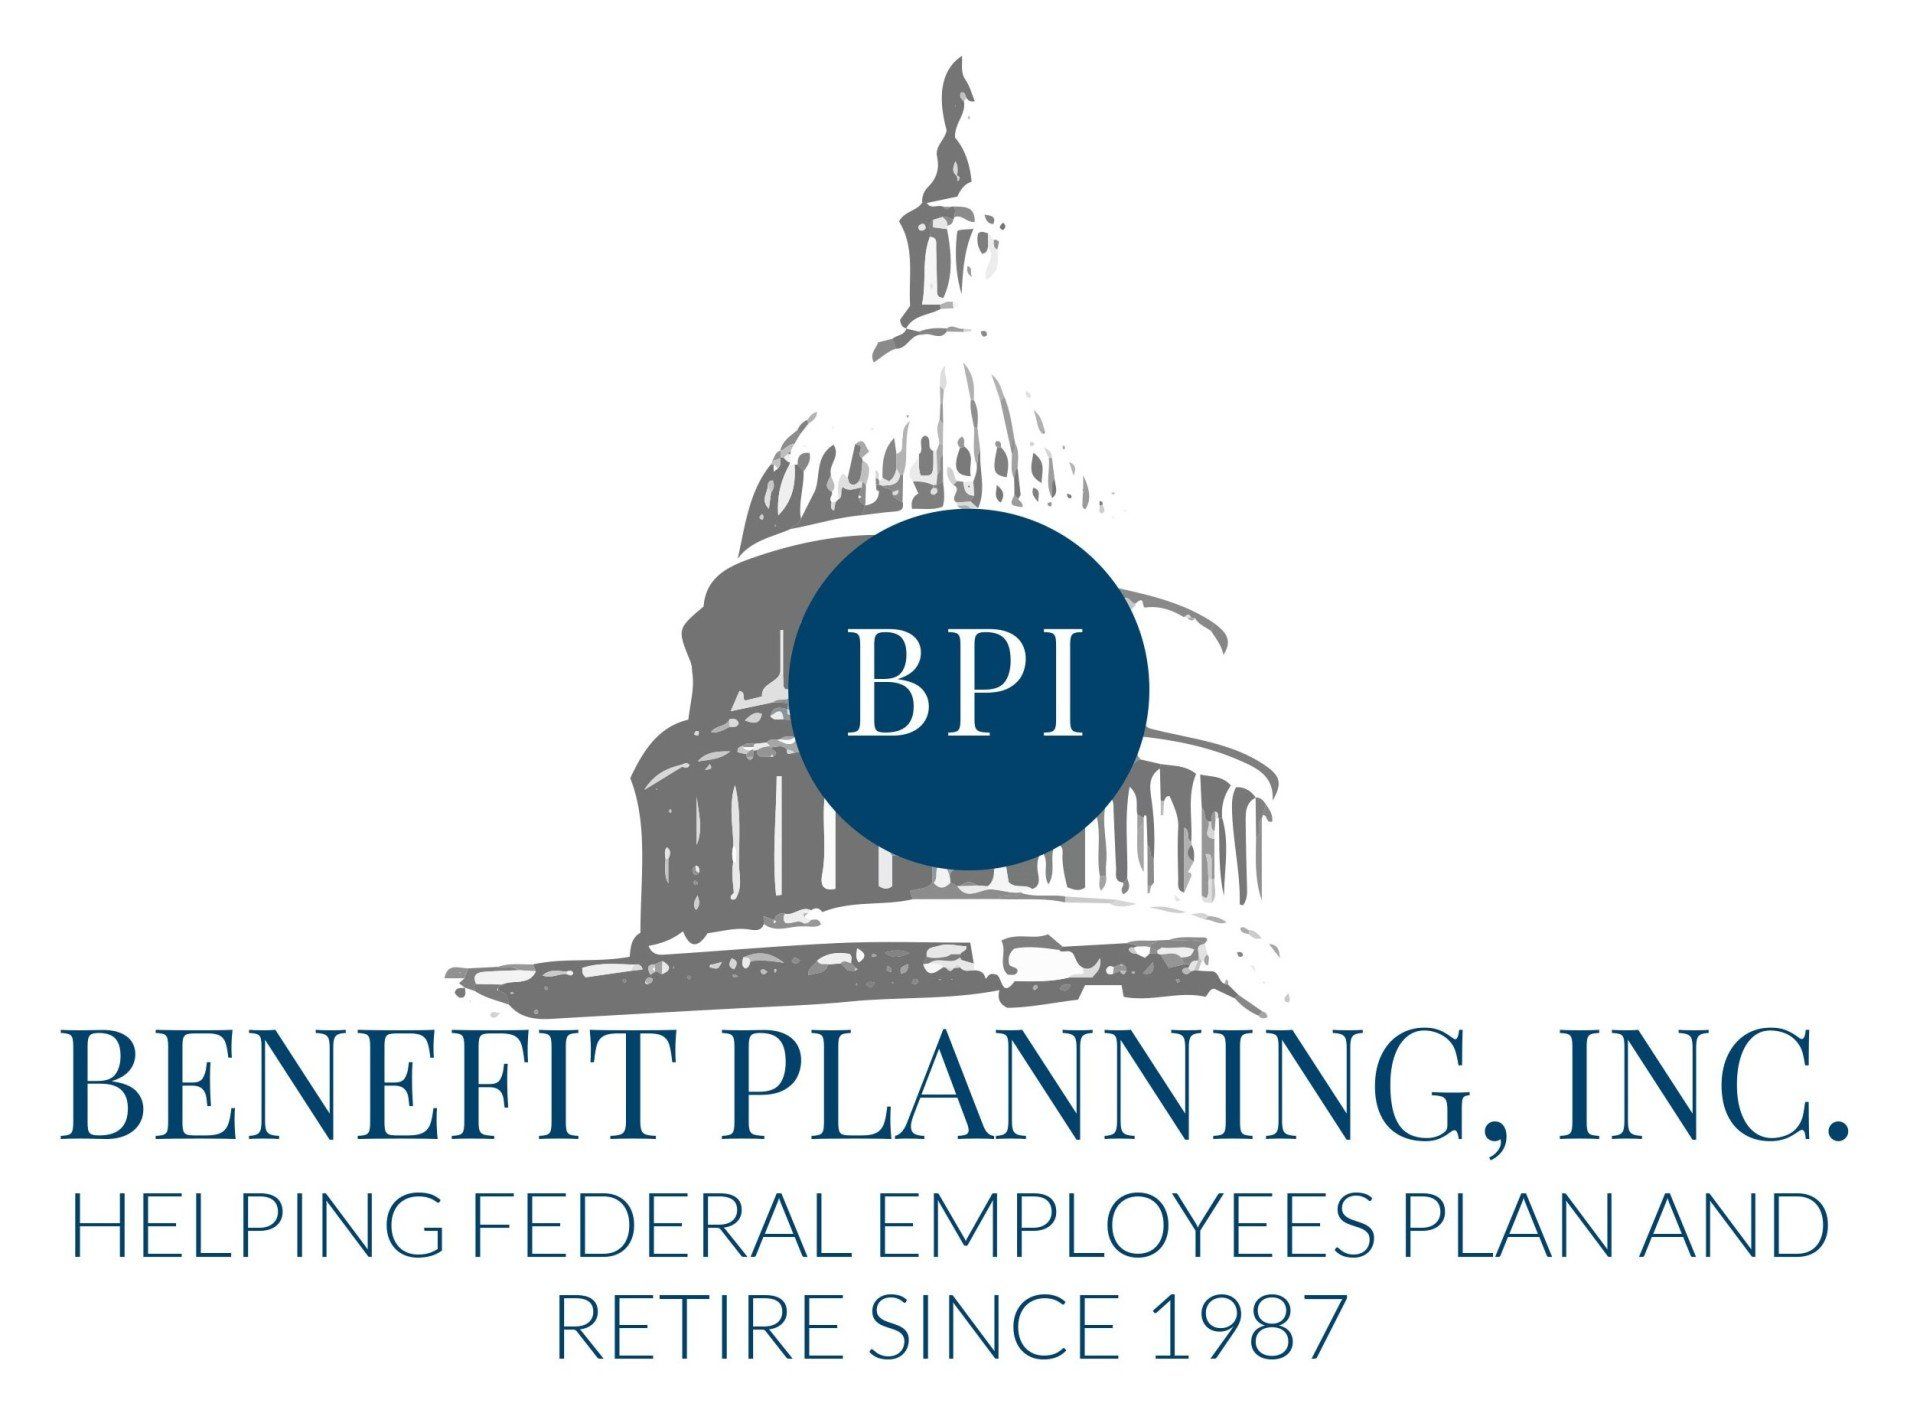 Benefit Planning Inc